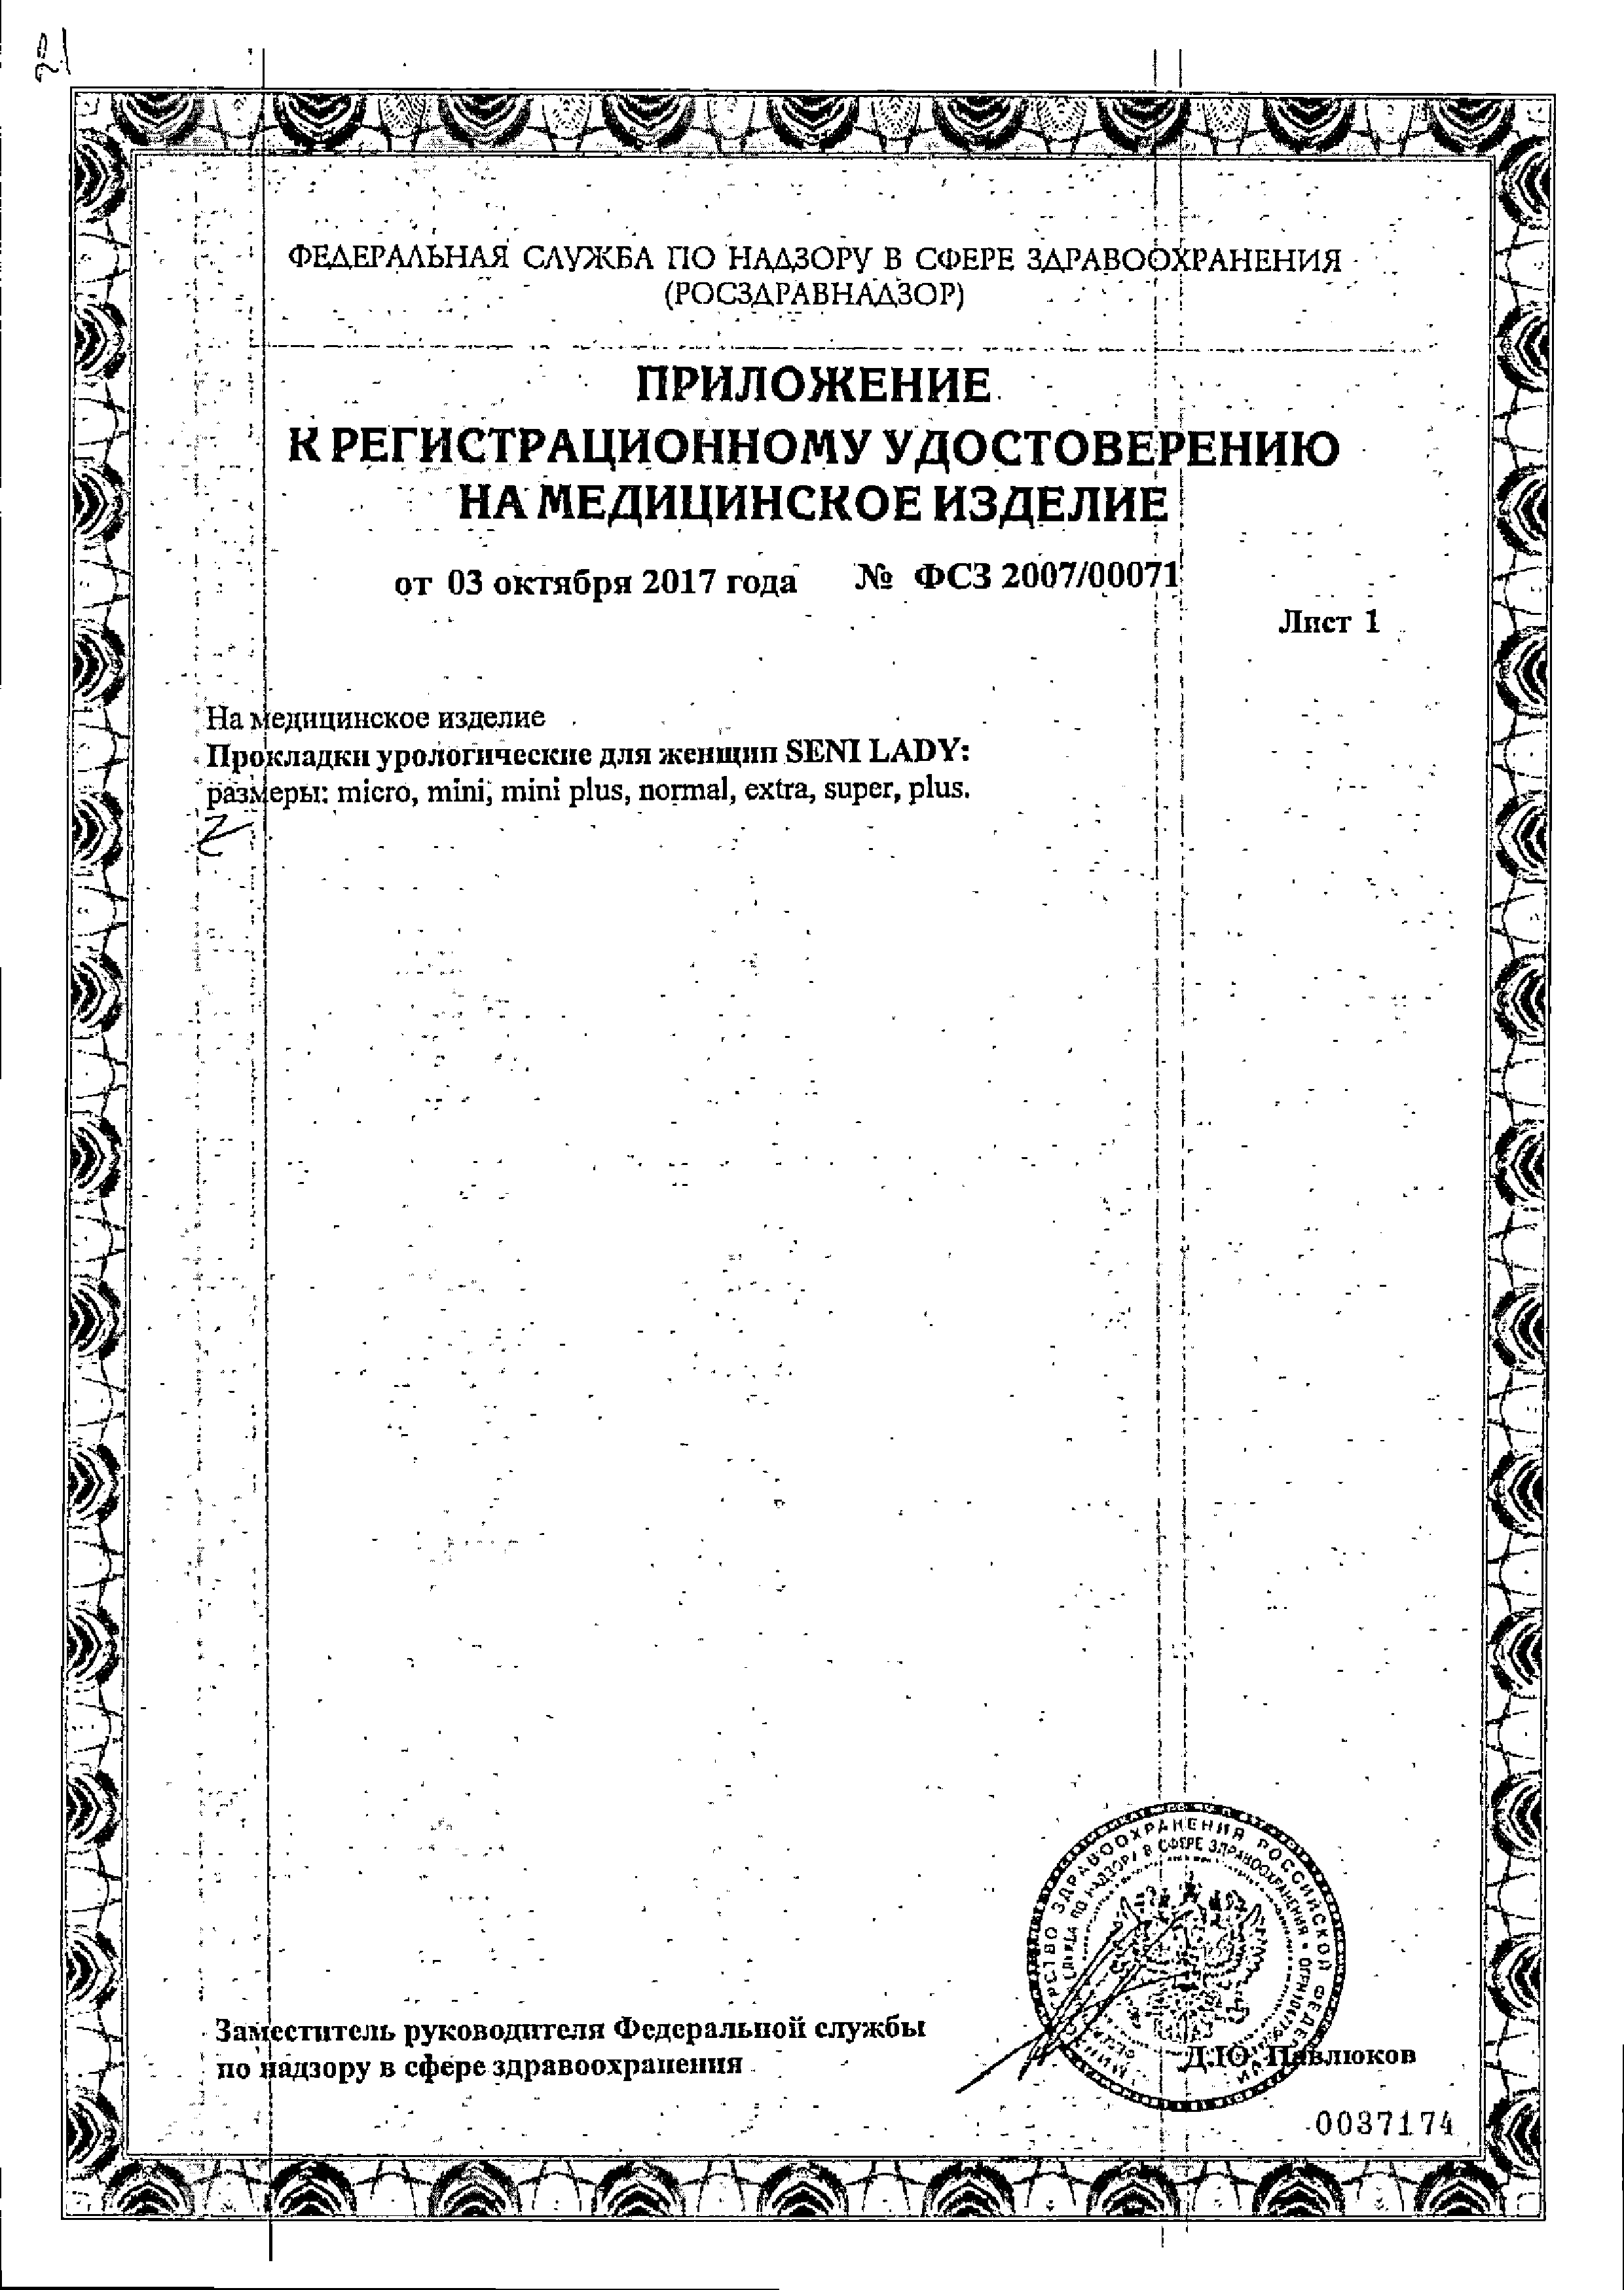 Seni Lady Mini прокладки урологические сертификат